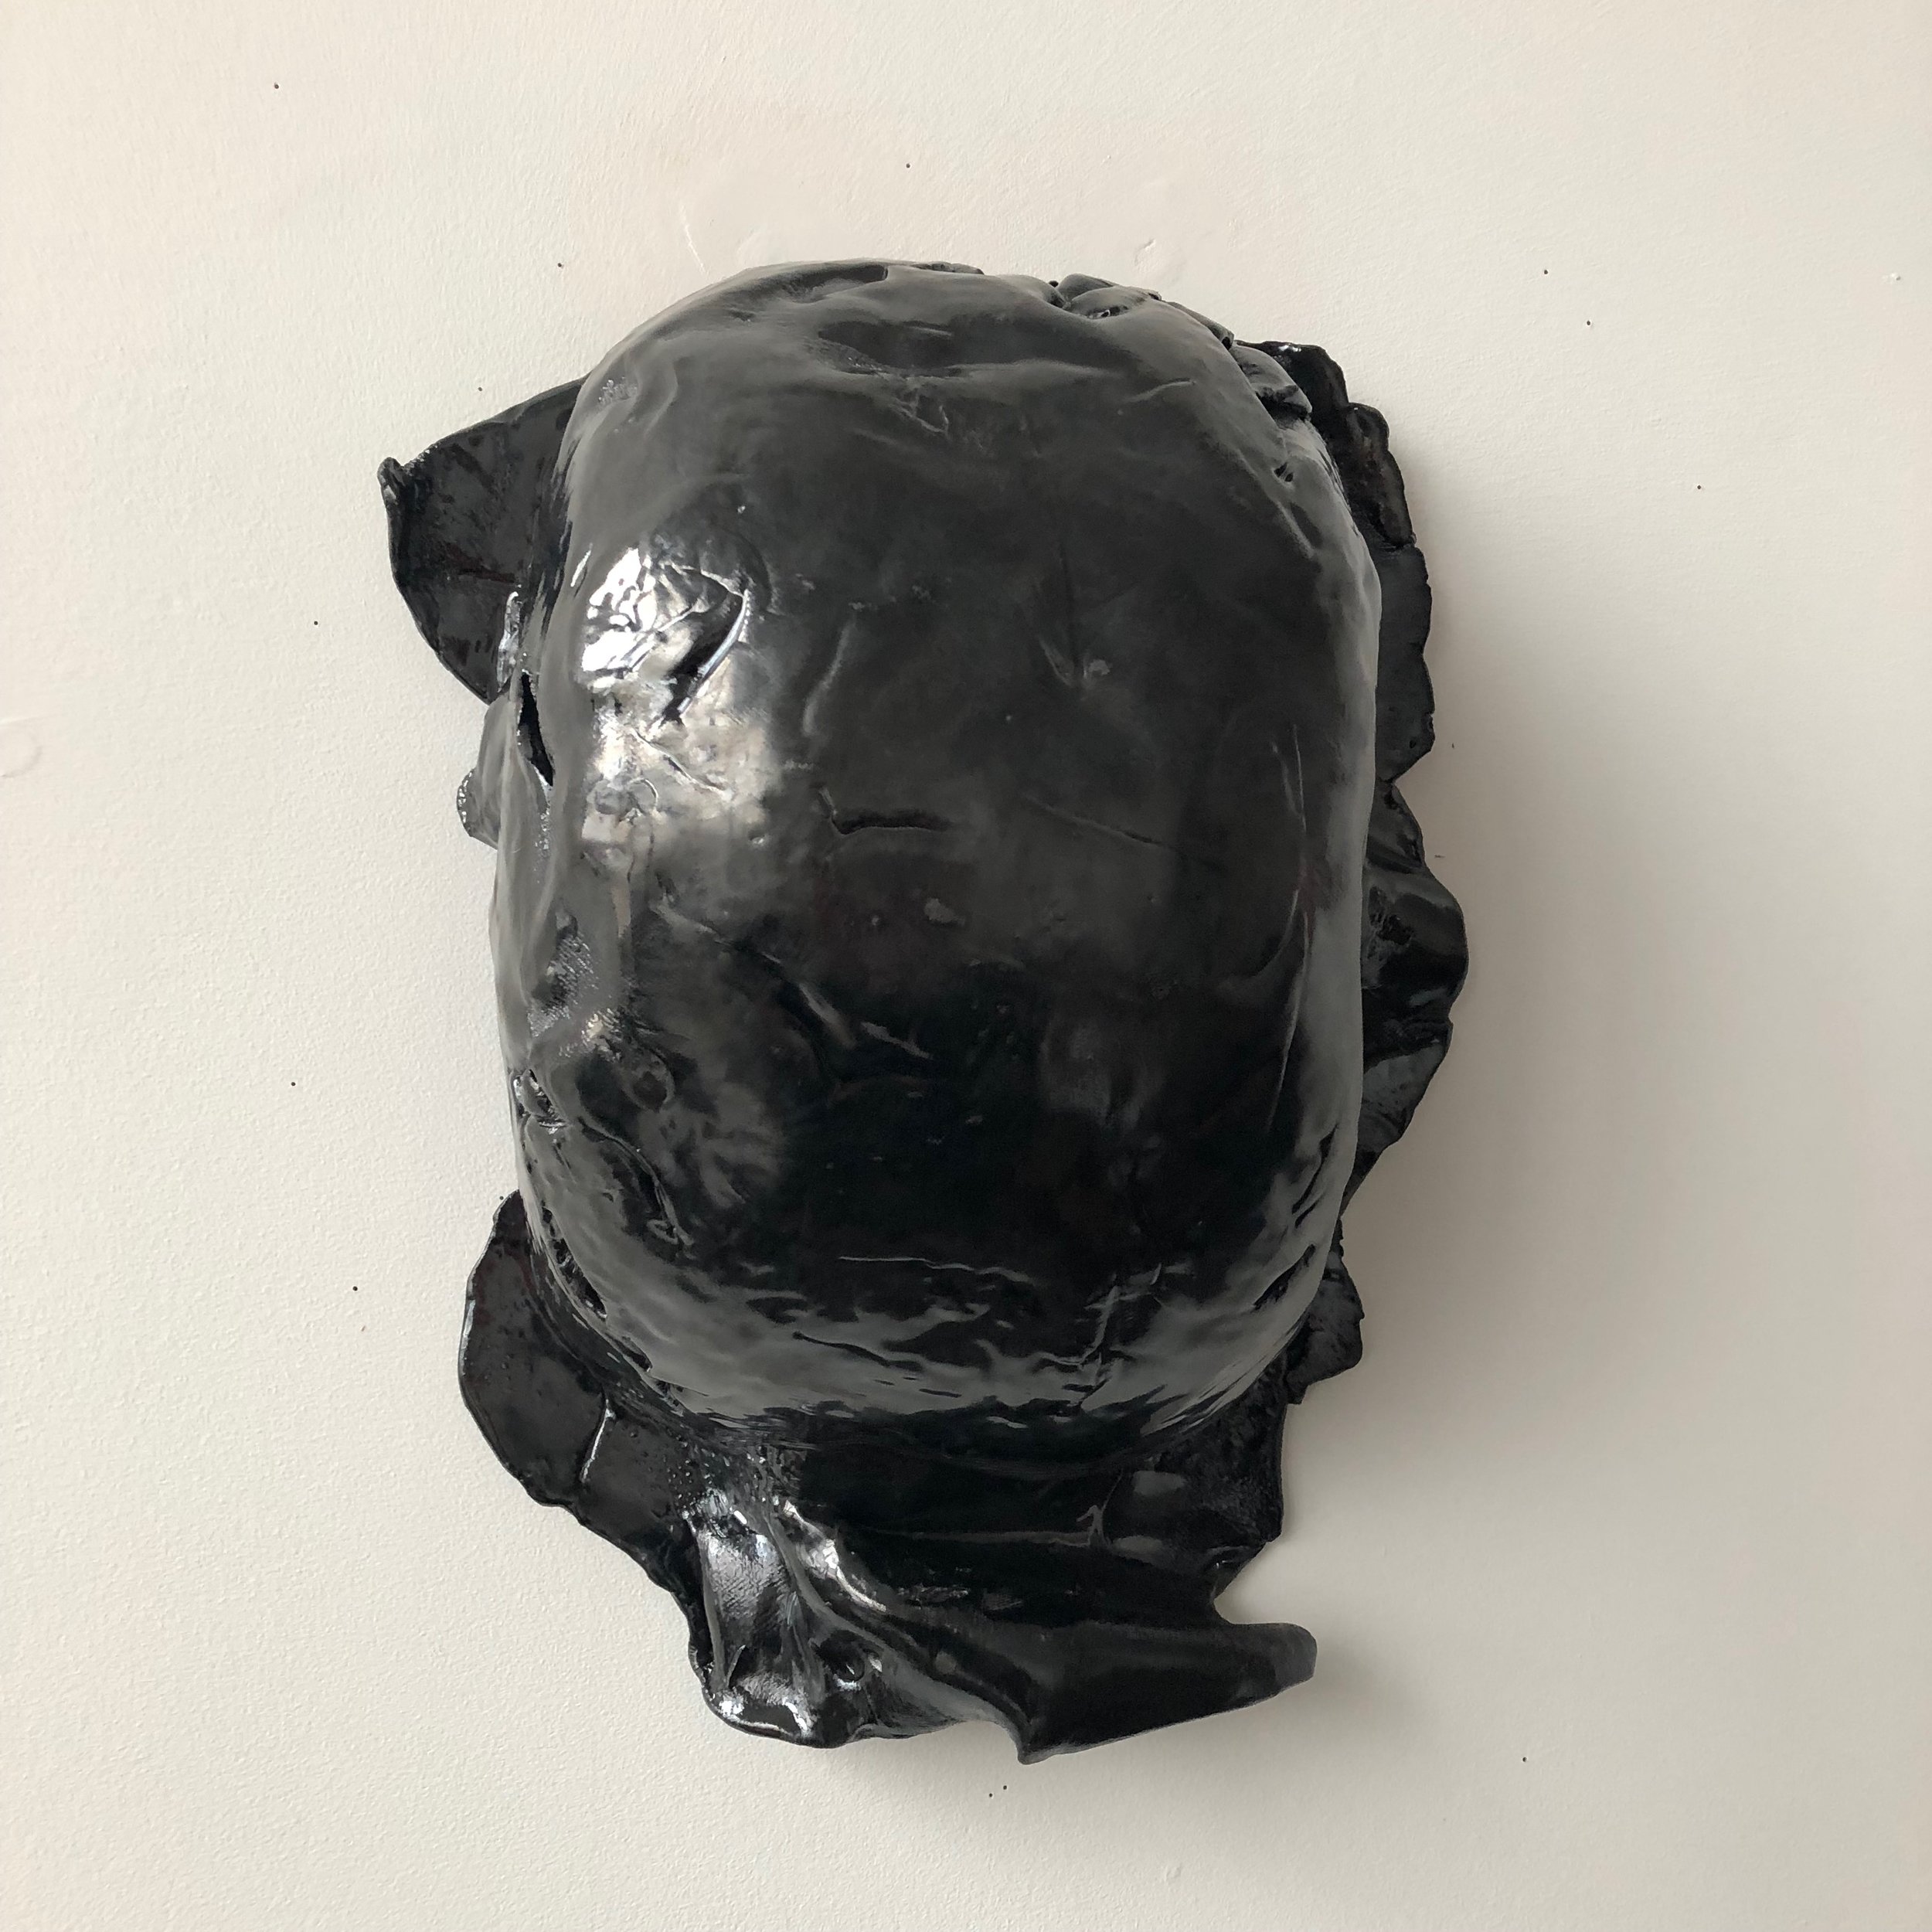 Untitled Belly Bag, 2019, glazed ceramic, 16 x 12 x 6 inches